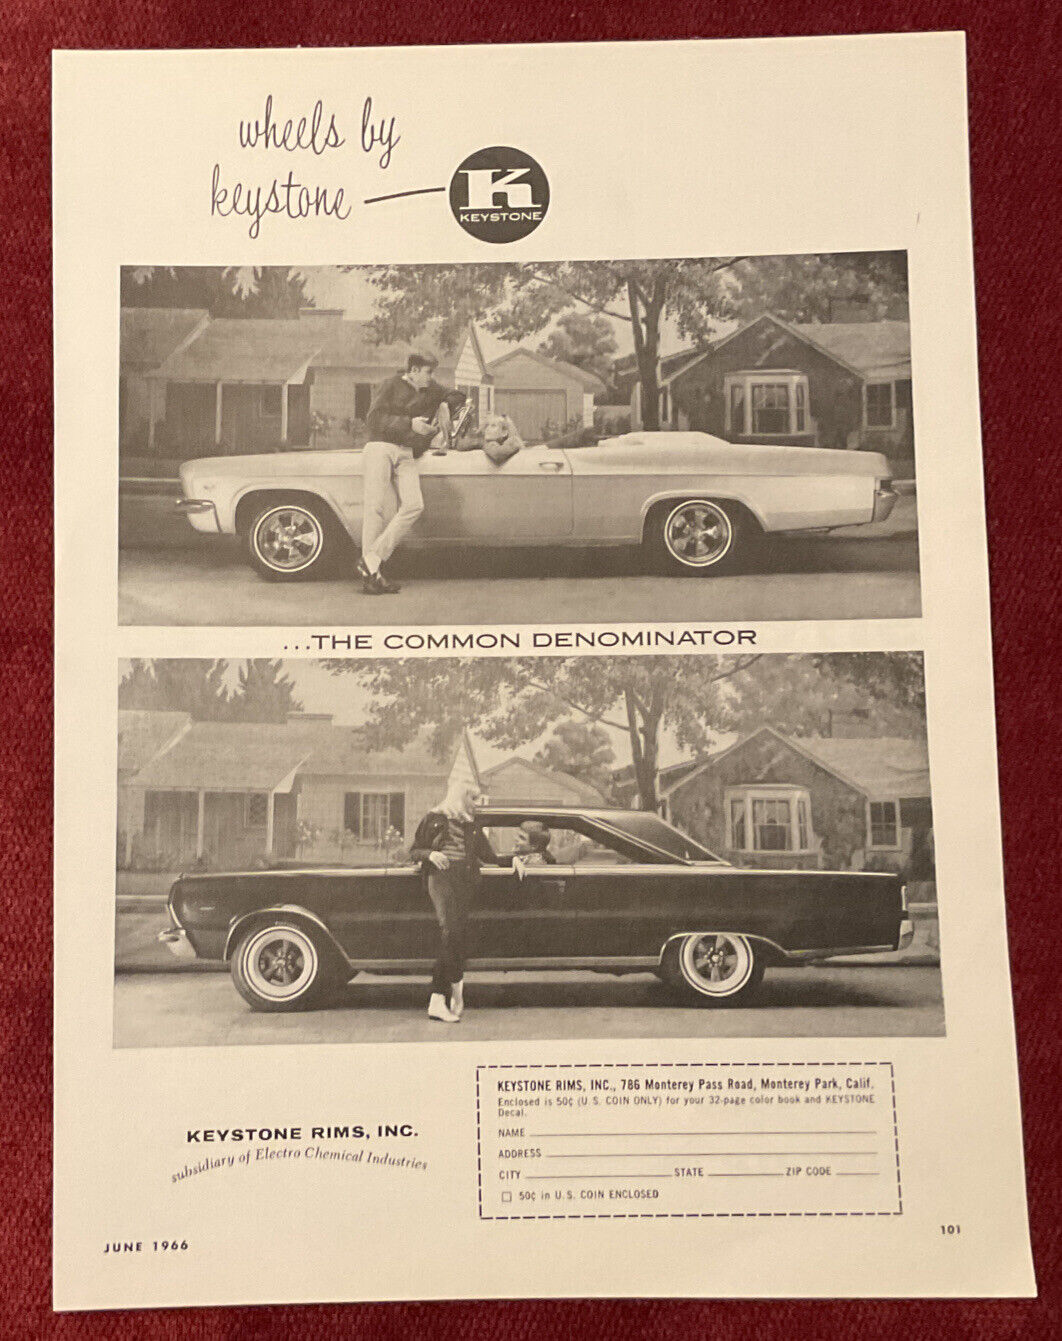 ORIGINAL 1966 KEYSTONE RIMS PRINT AD - THE COMMON DENOMINATOR